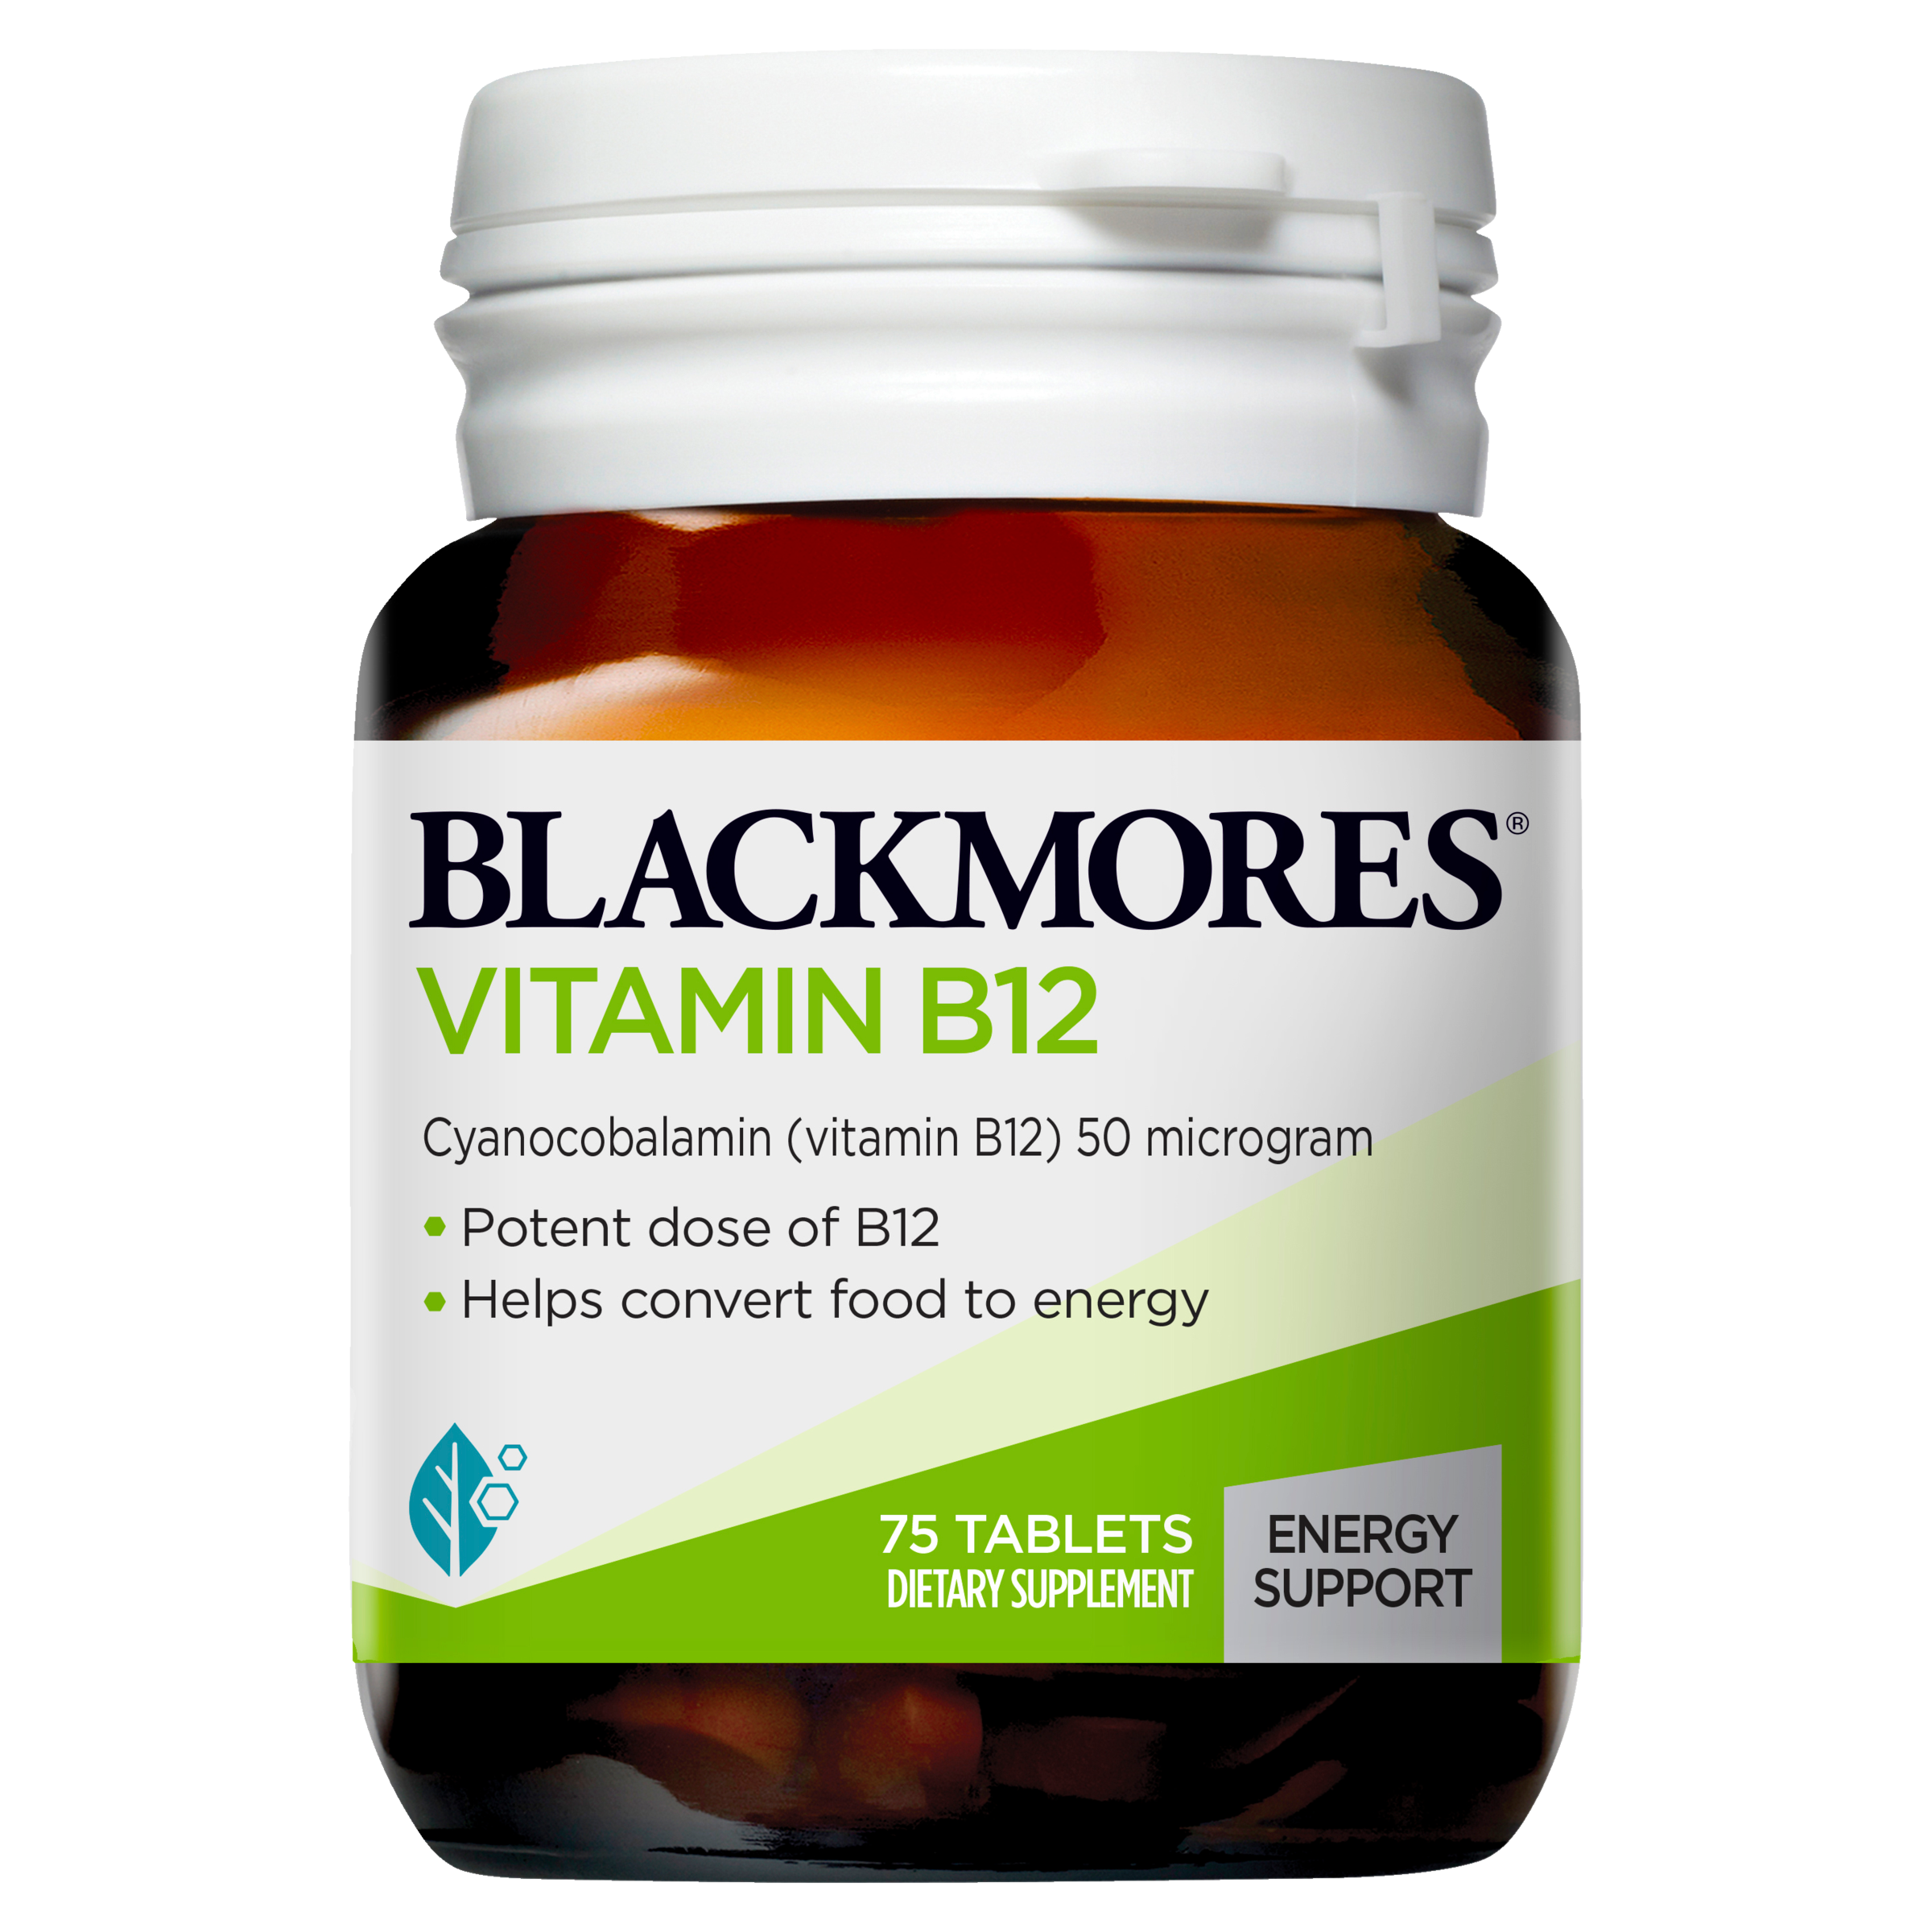 Blackmores Vitamin B12